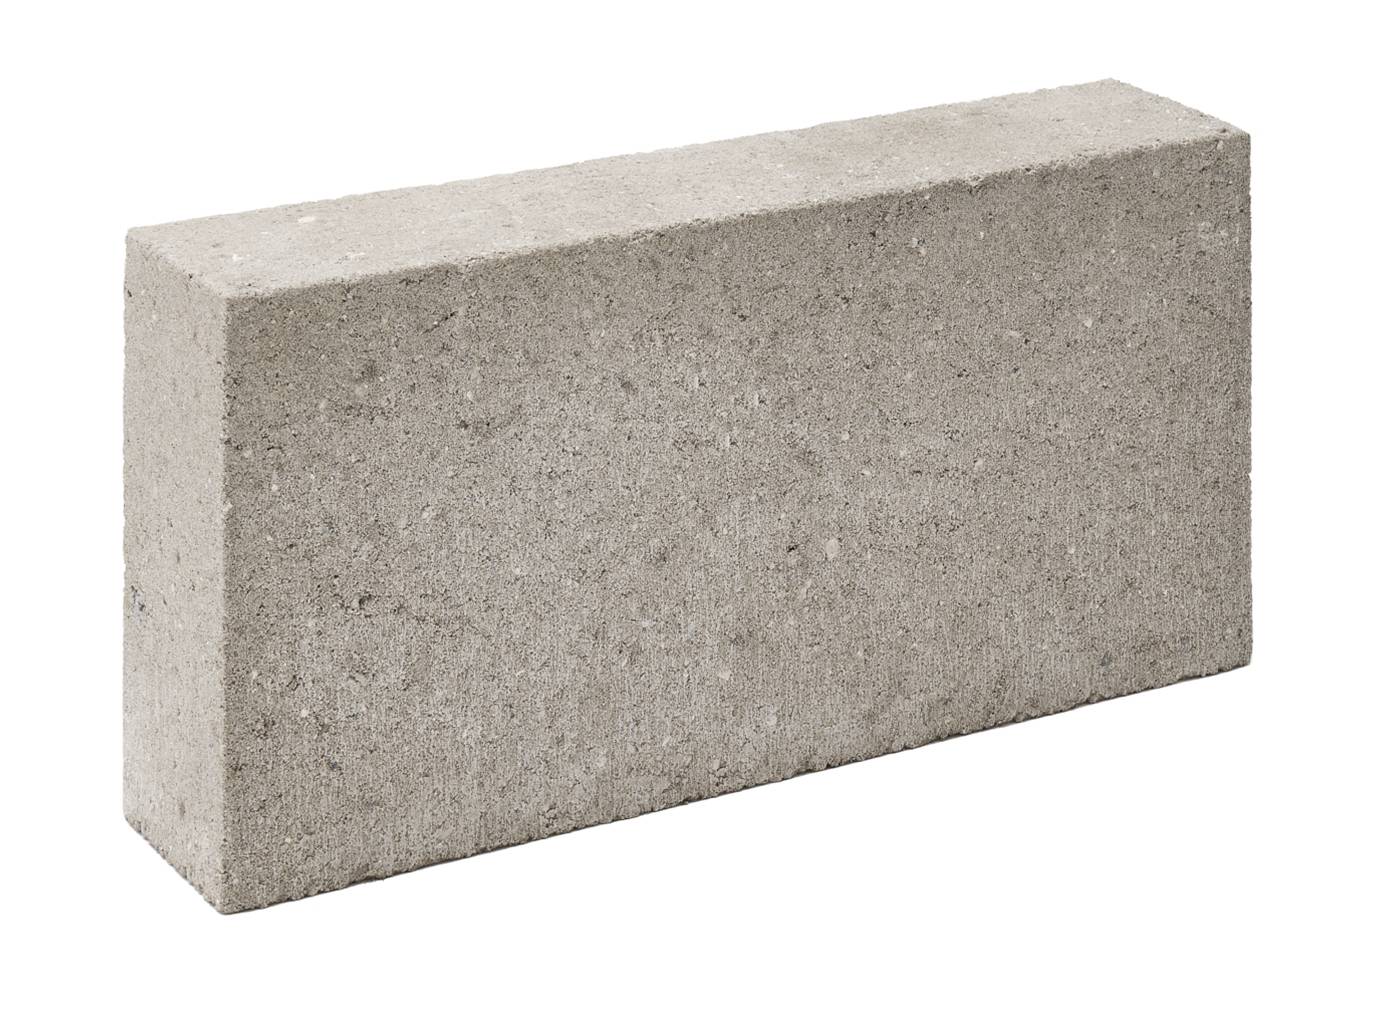 Lignacite SP 140 mm 7.3 N Concrete Blocks - Fine-Textured Loadbearing Units